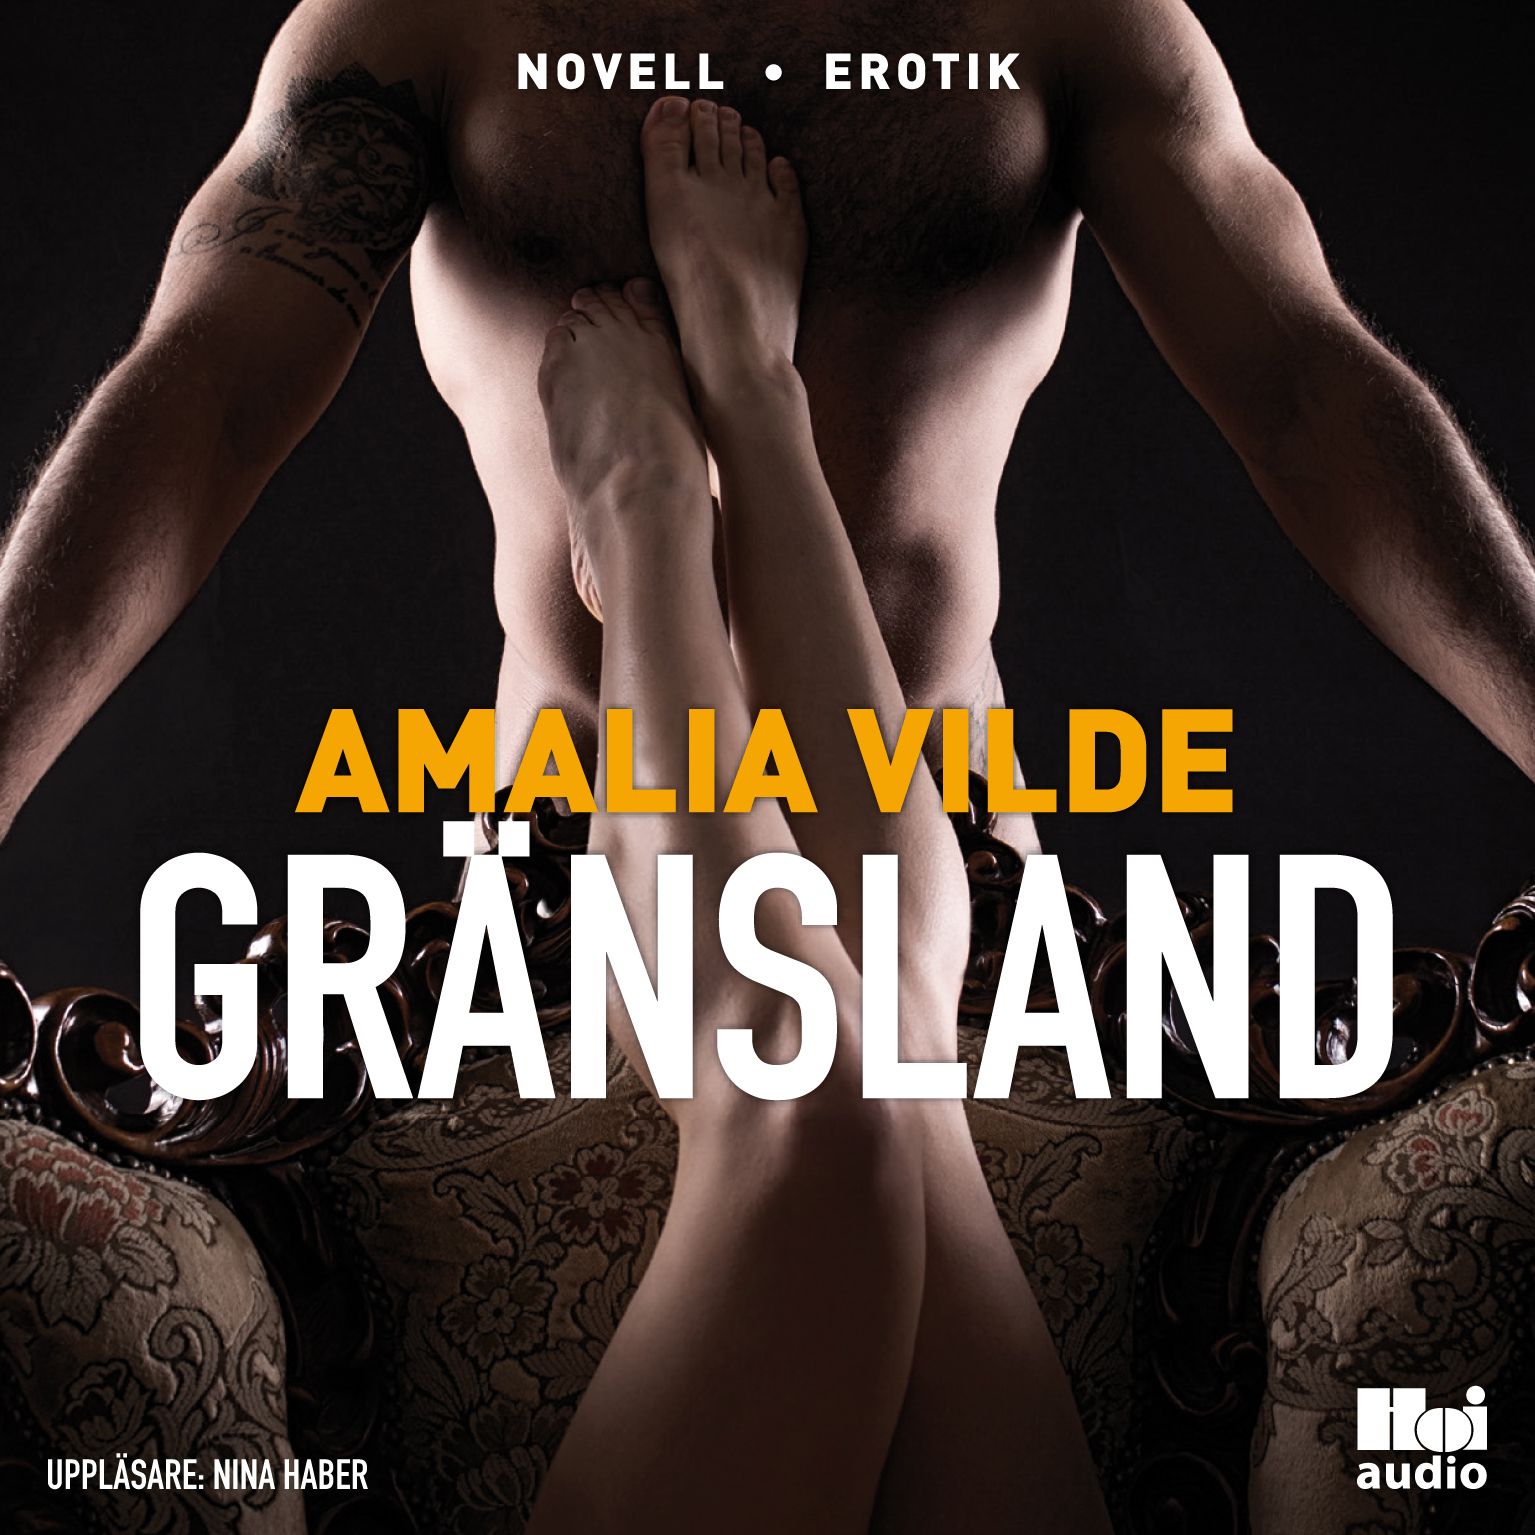 Gränsland, ljudbok av Amalia Vilde